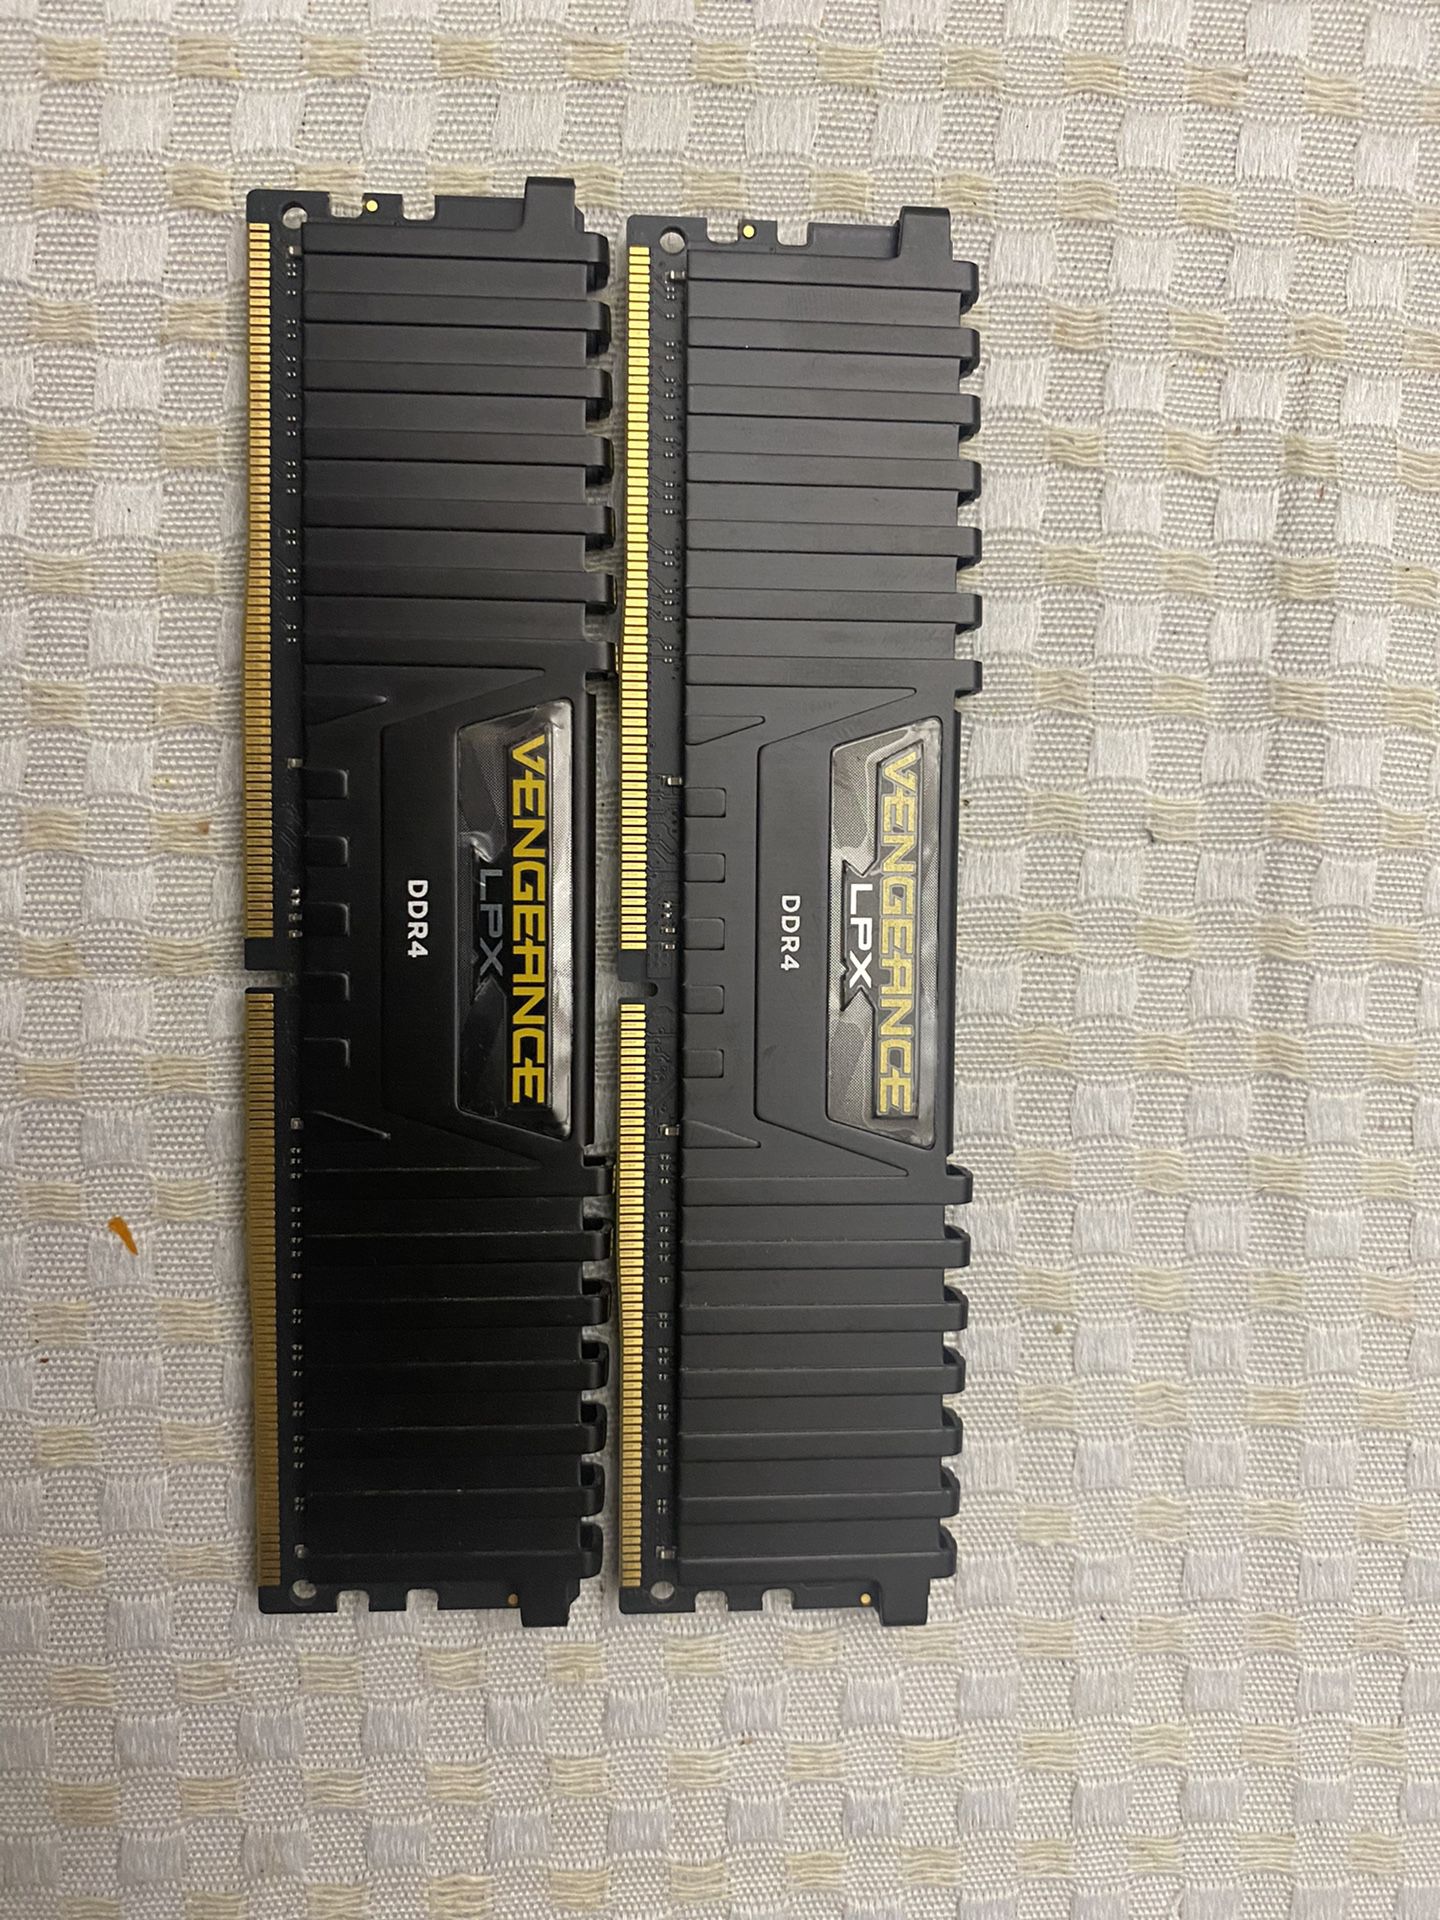 Corsair Vengeance LPX 2x8gb 3200mhz DDR4 Ram